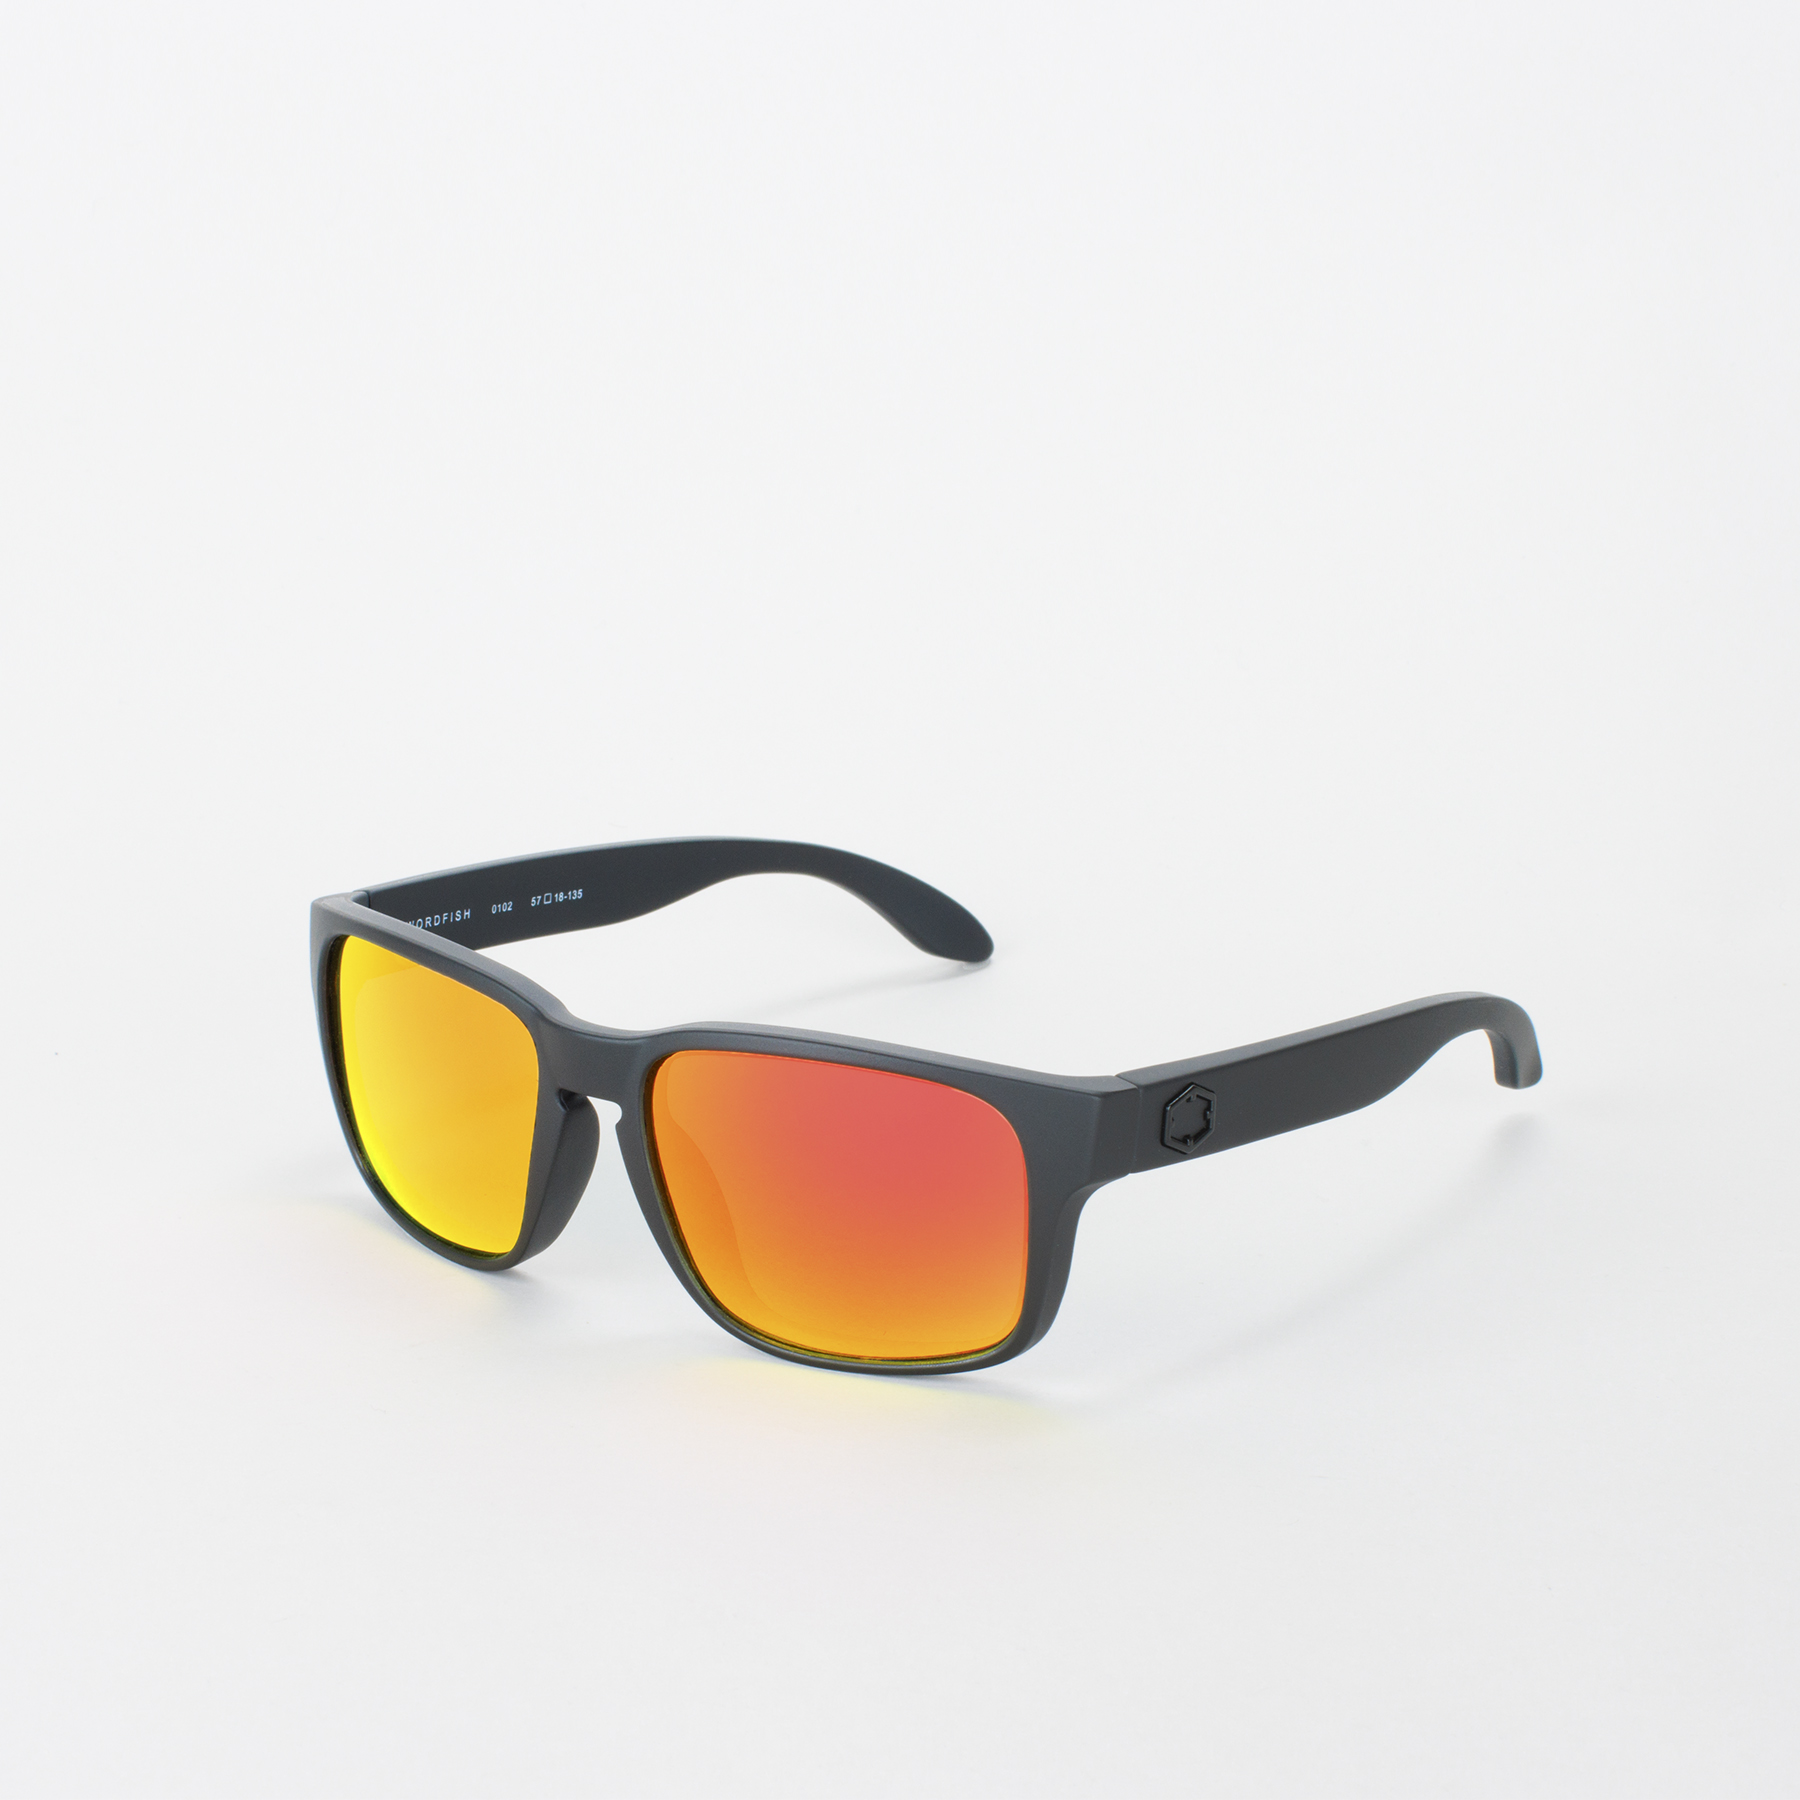 Swordfish black sunglasses with The One Fuoco lens